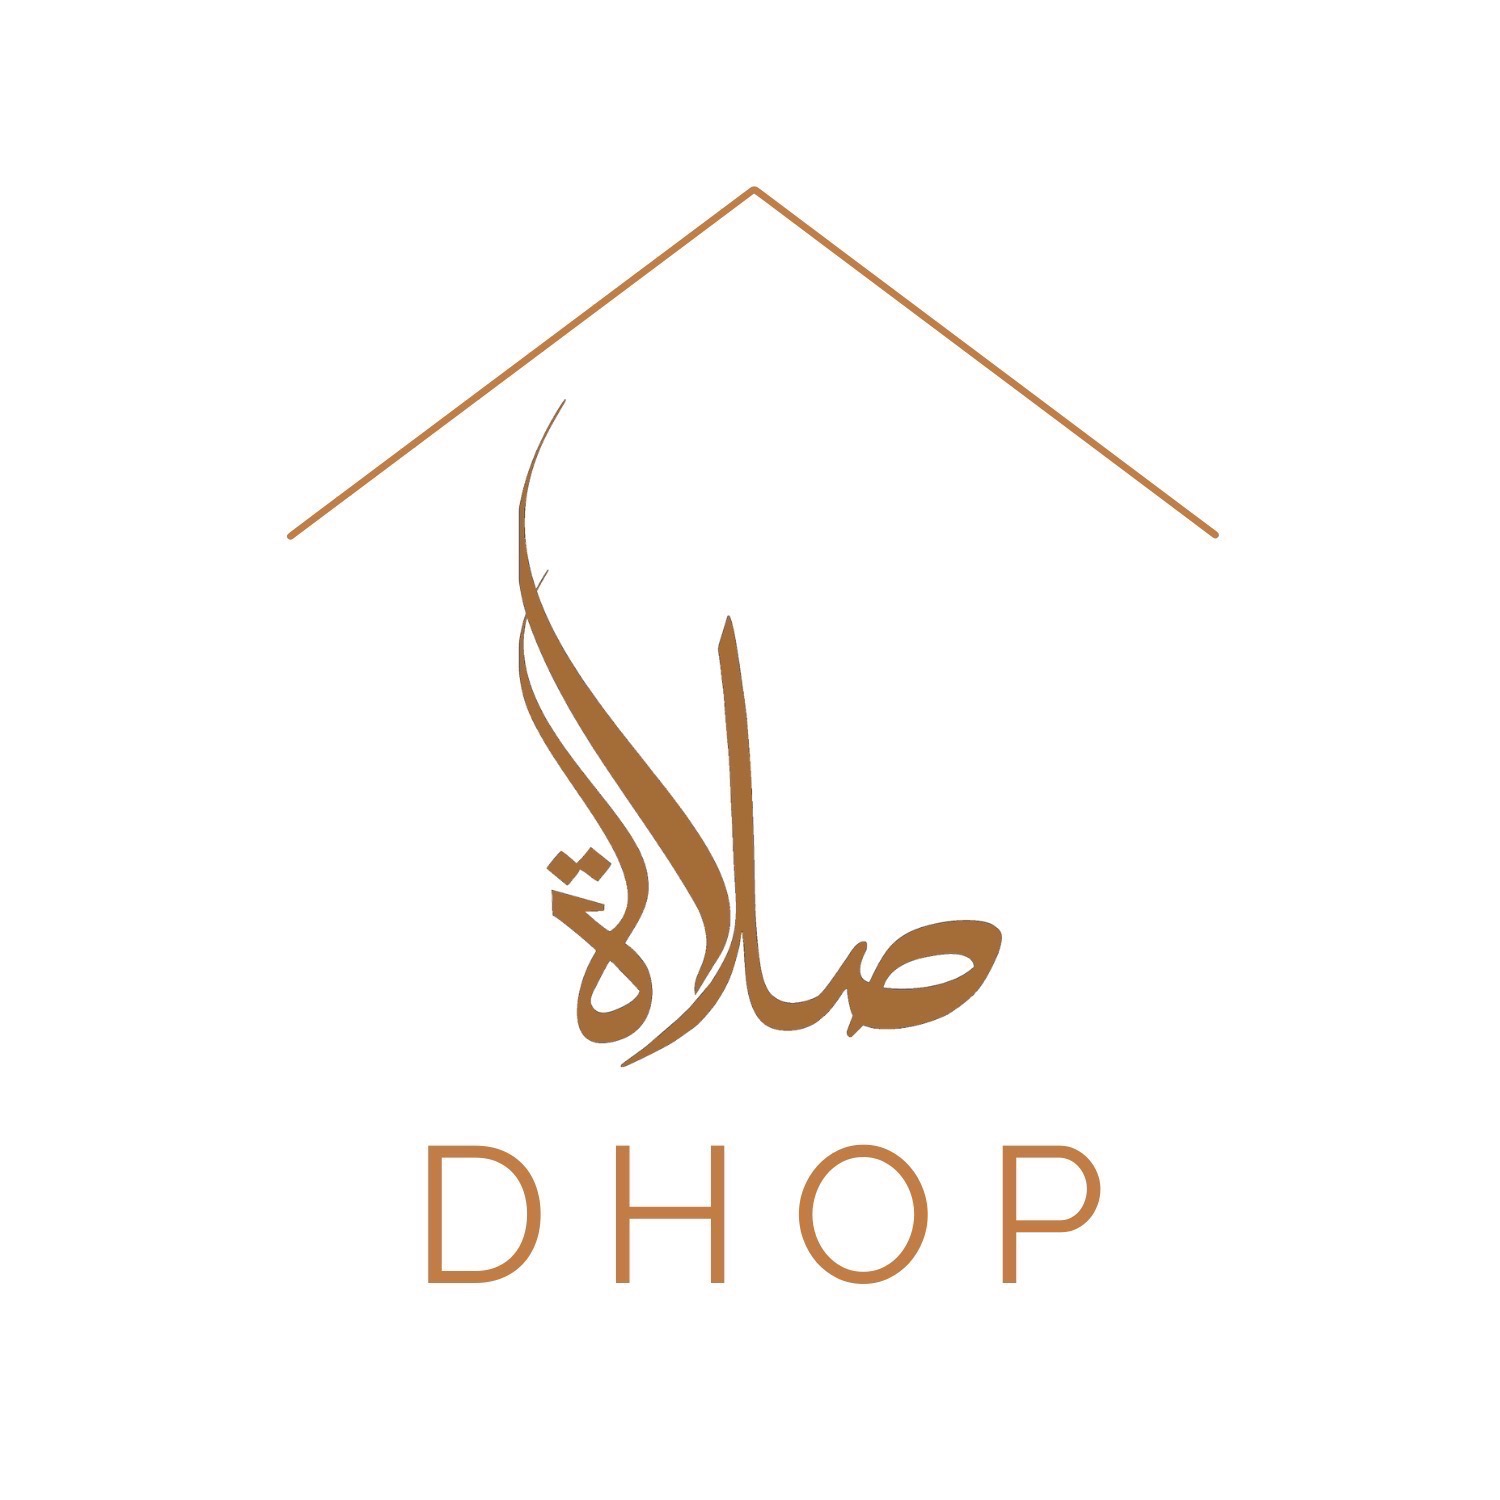 DHOP Culture & Values